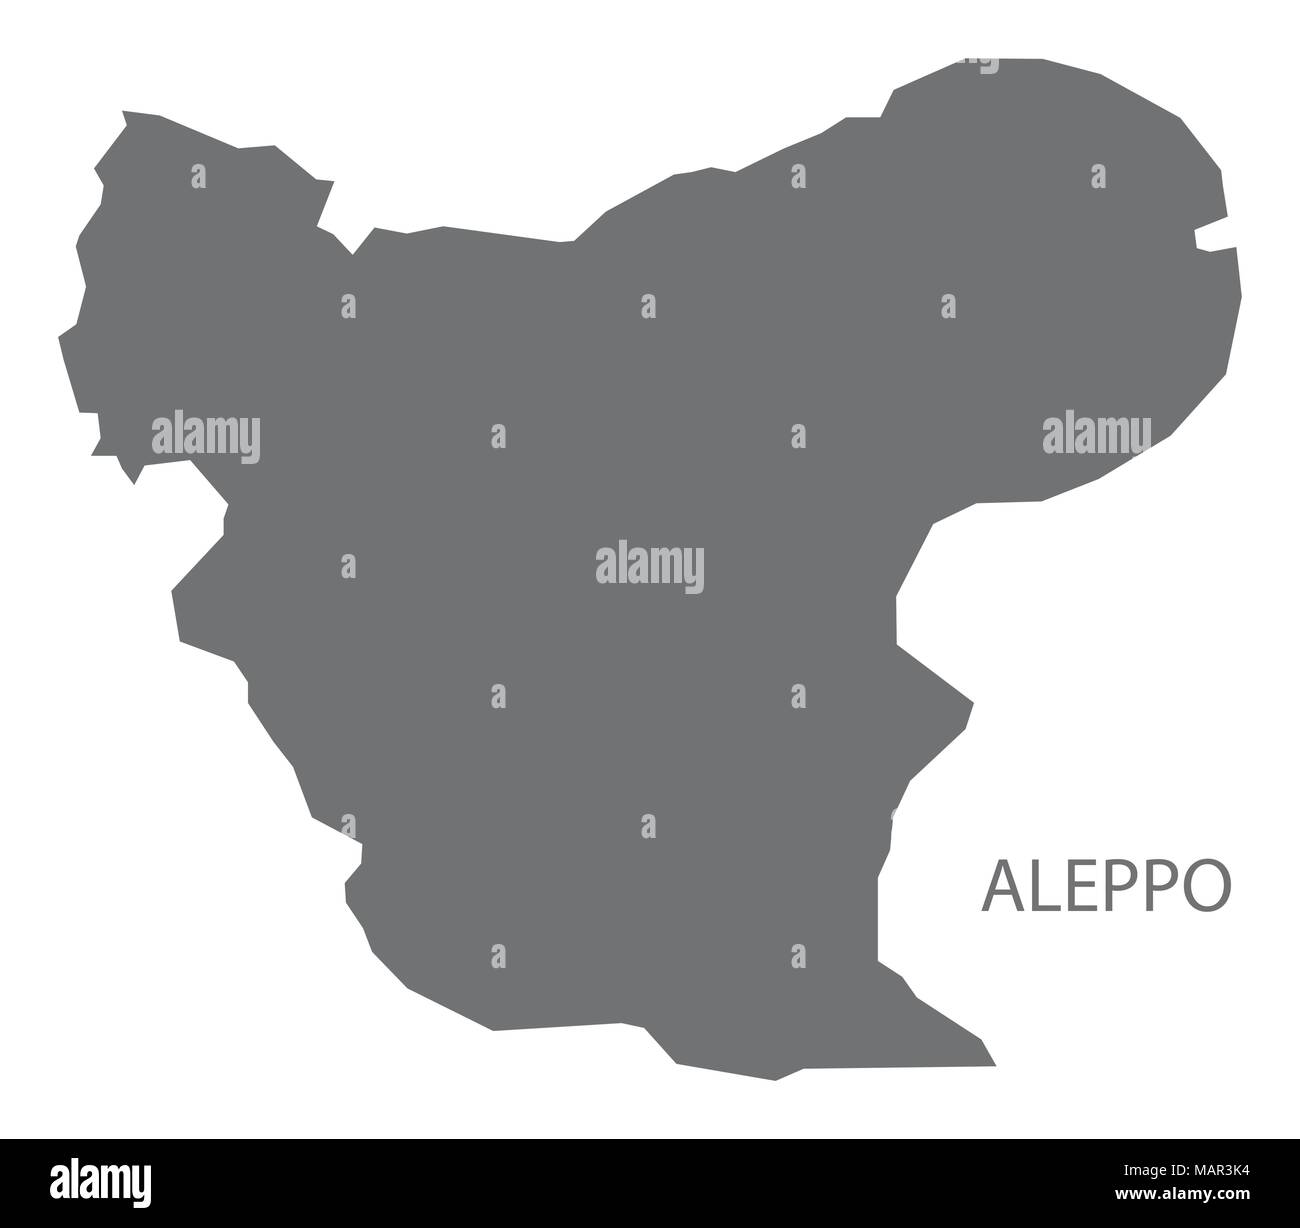 Aleppo map of Syria grey illustration shape Stock Vector